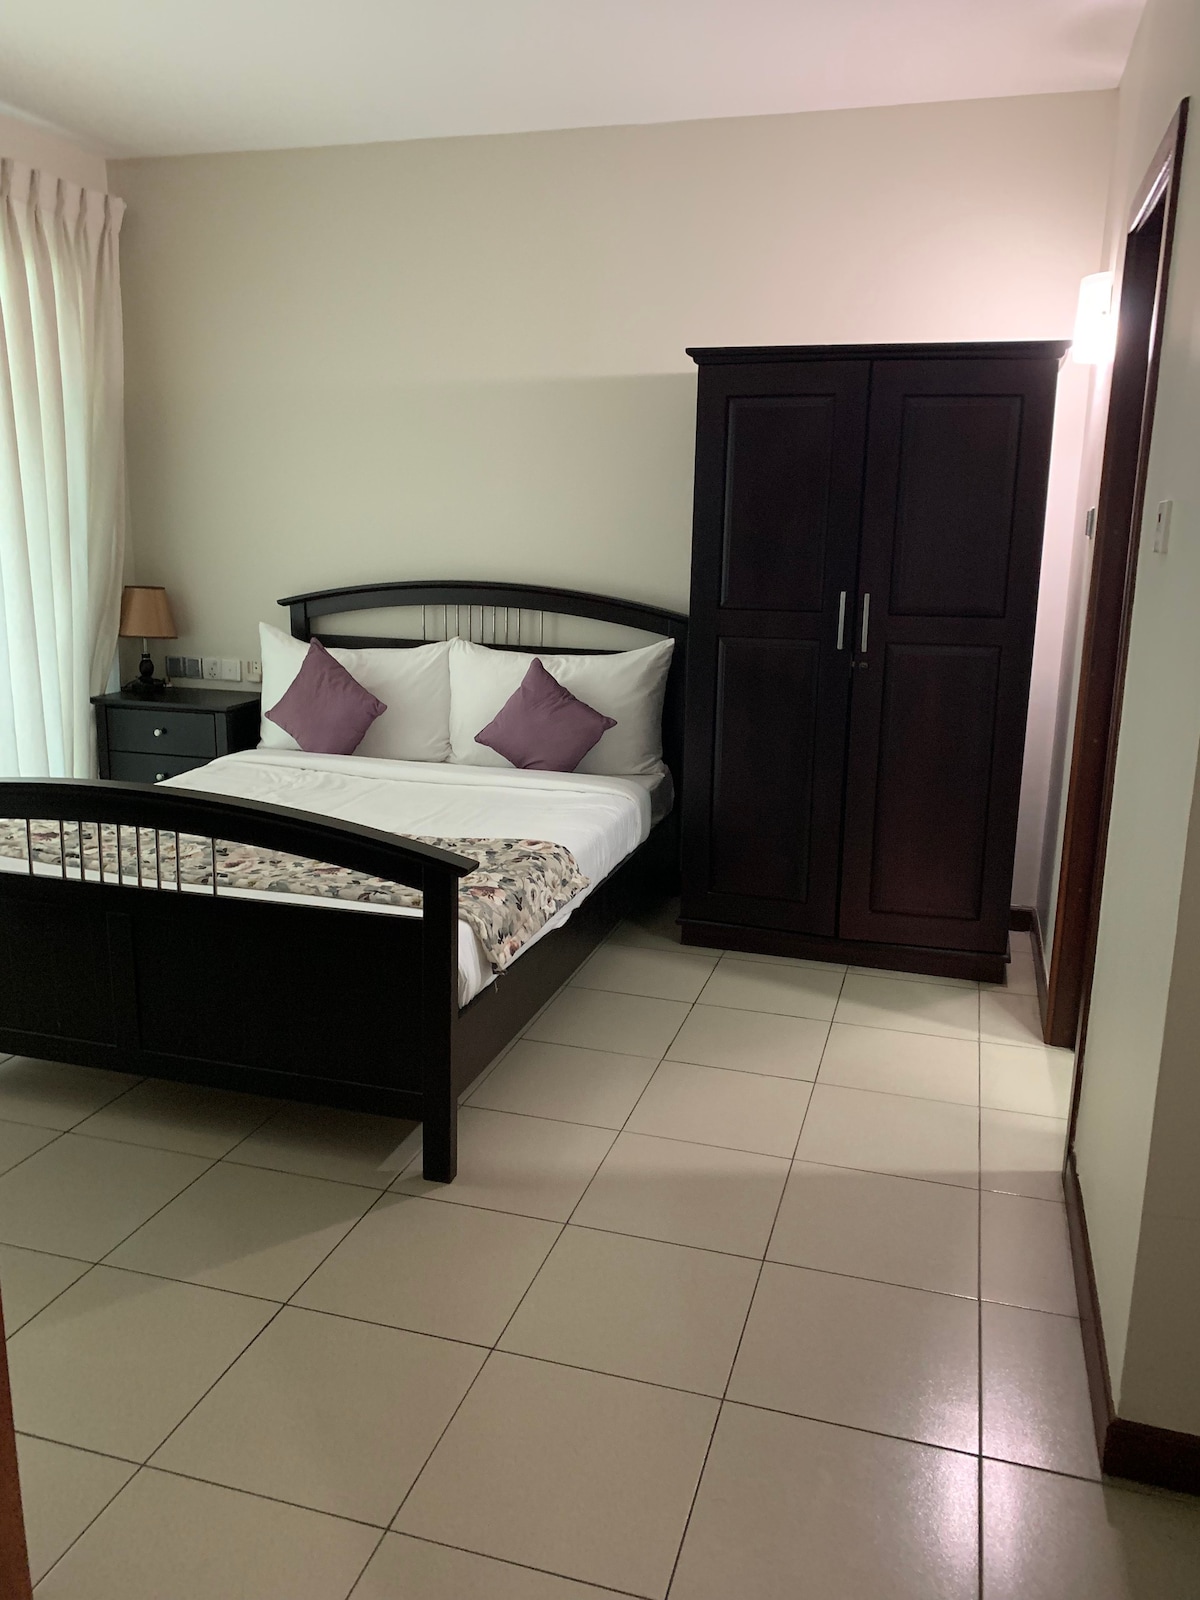 2 Bedroom Luxury Apartment Colombo 3